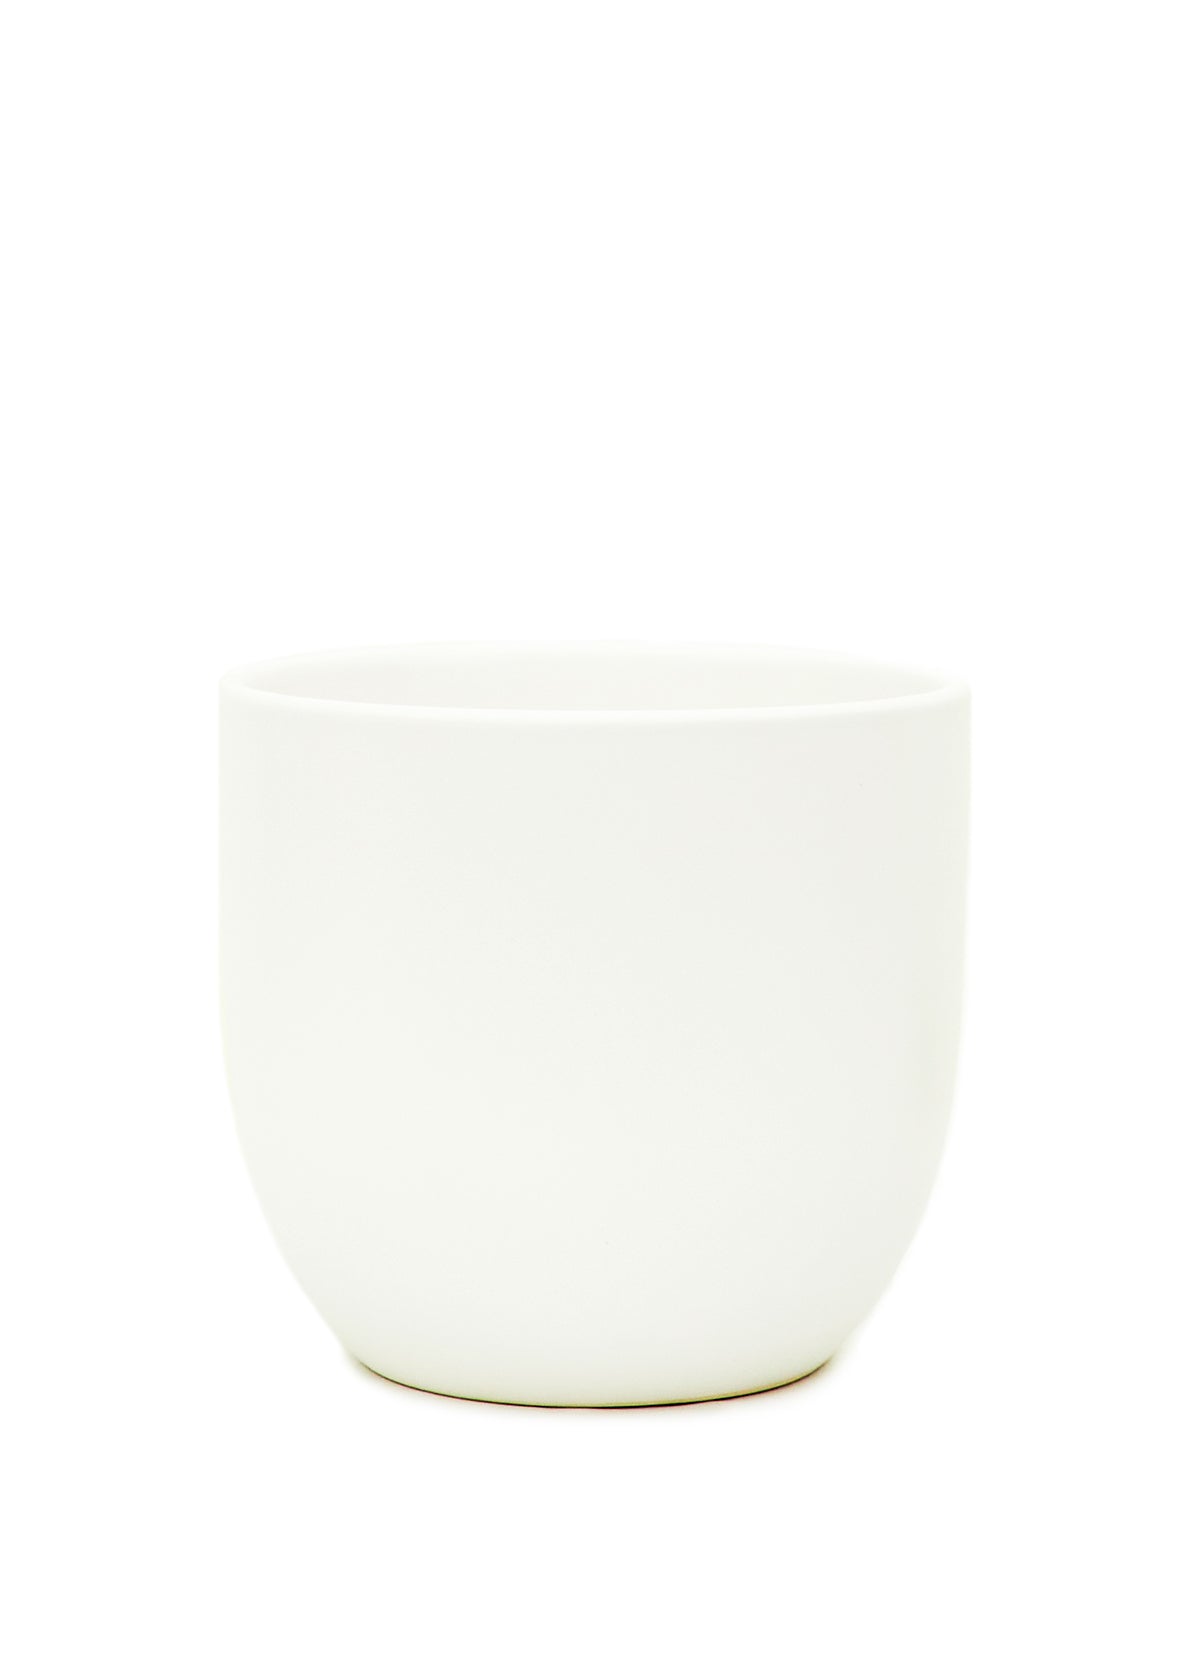 Rounded Ceramic Planter, White 7" Wide